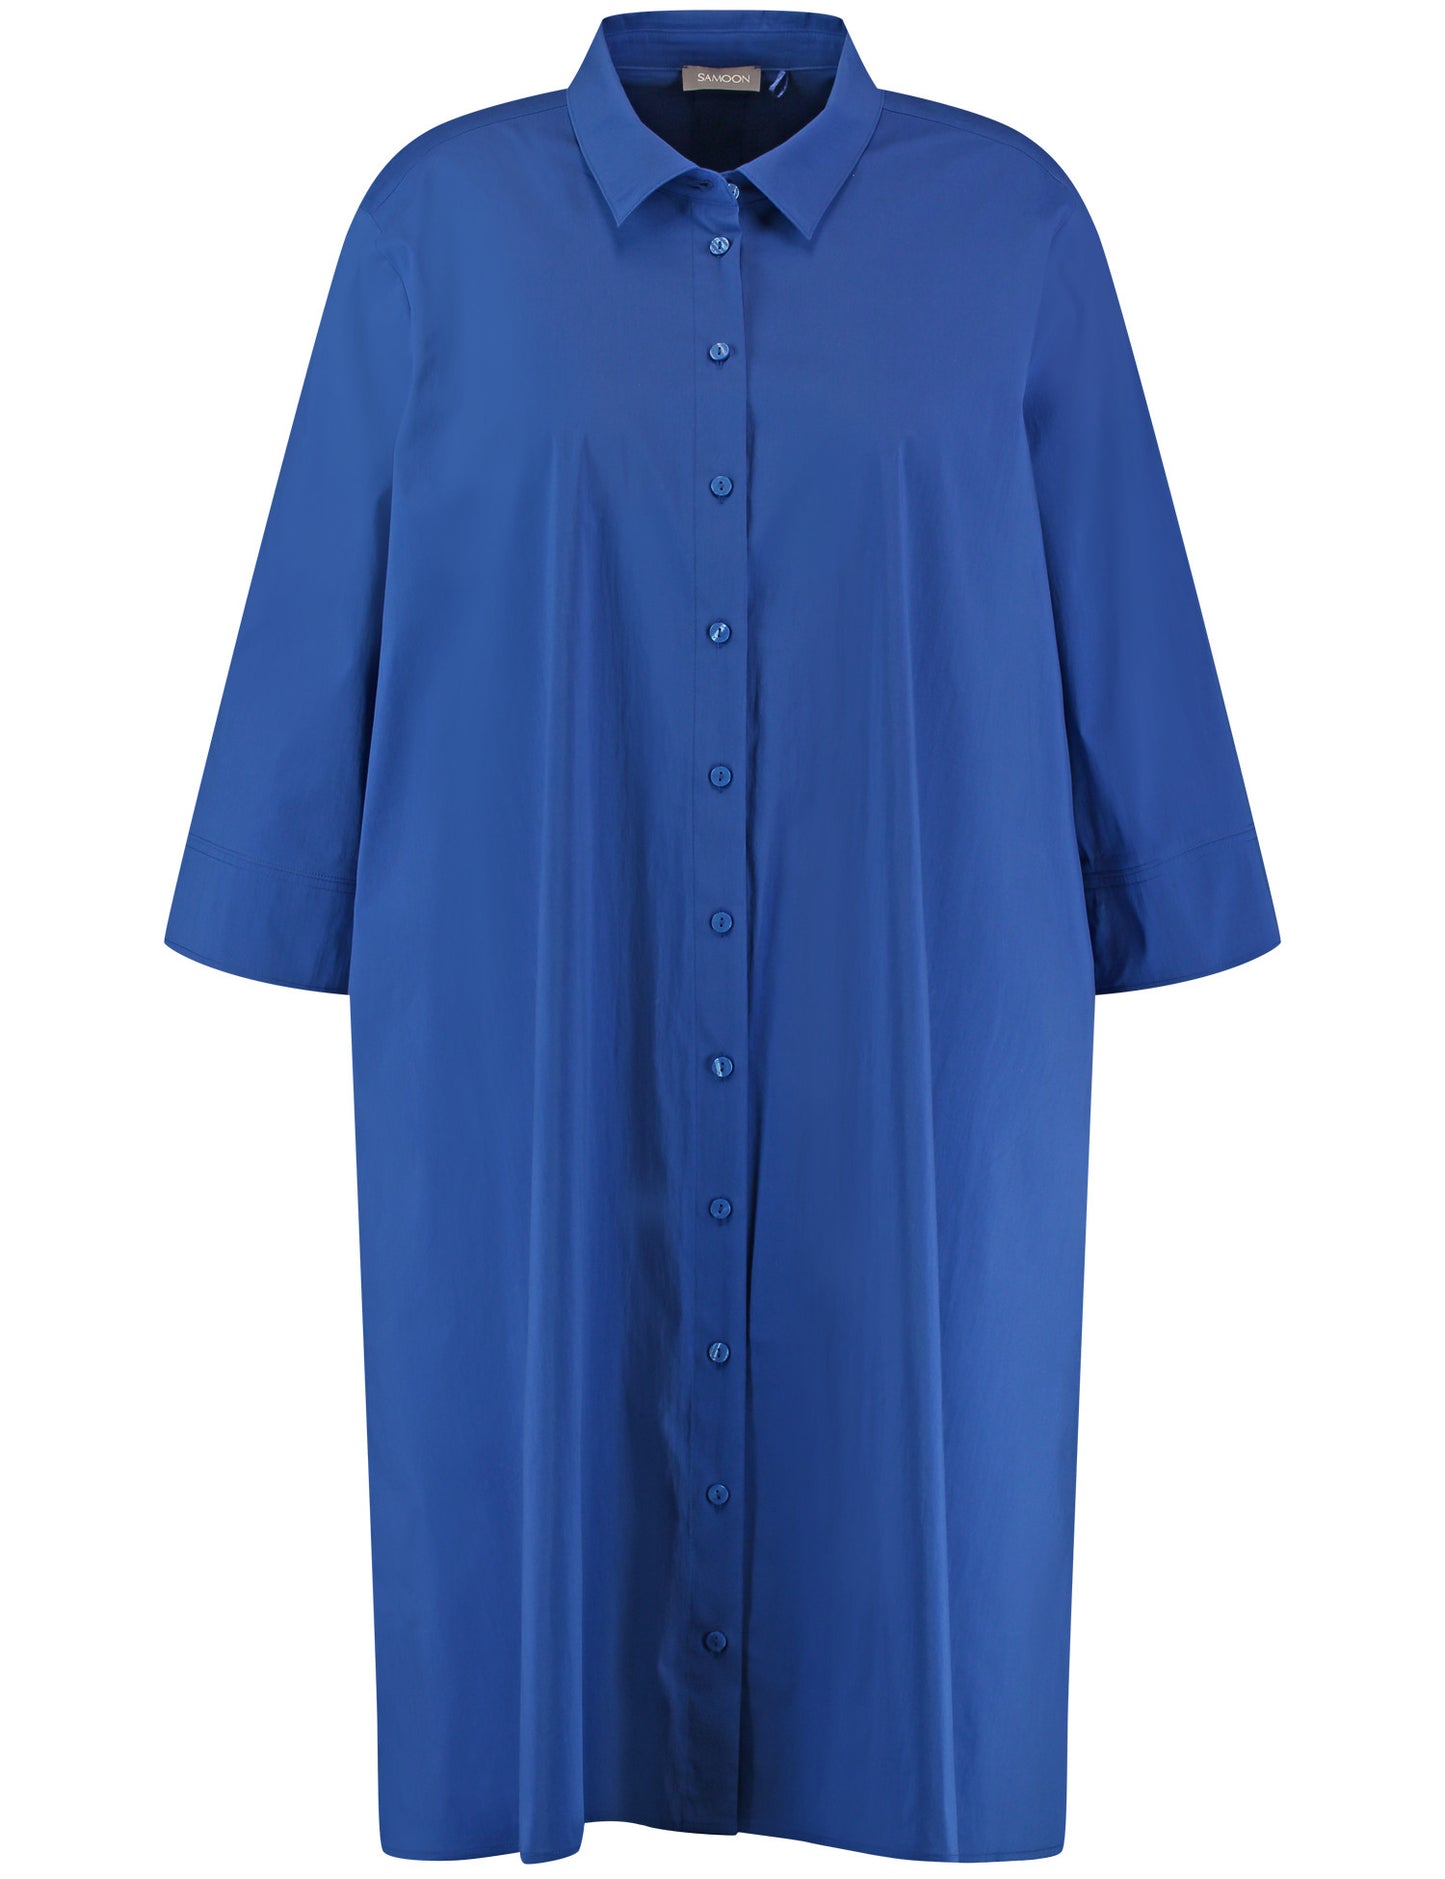 A-line blouse dress